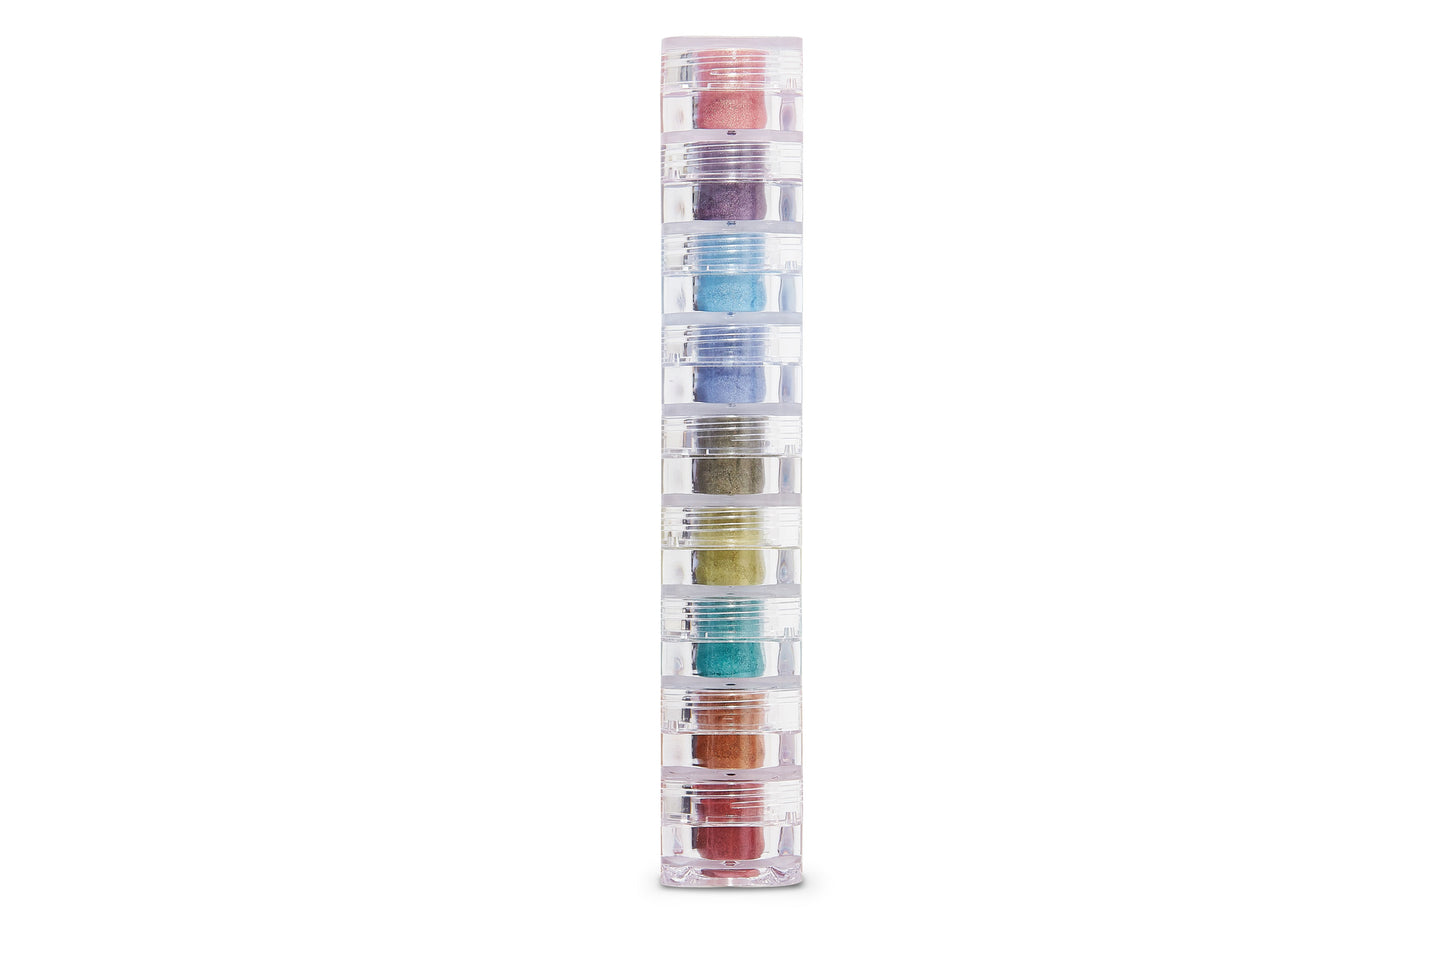 Bellapierre Lip and Eye 9-stack Shimmer – Fabulous